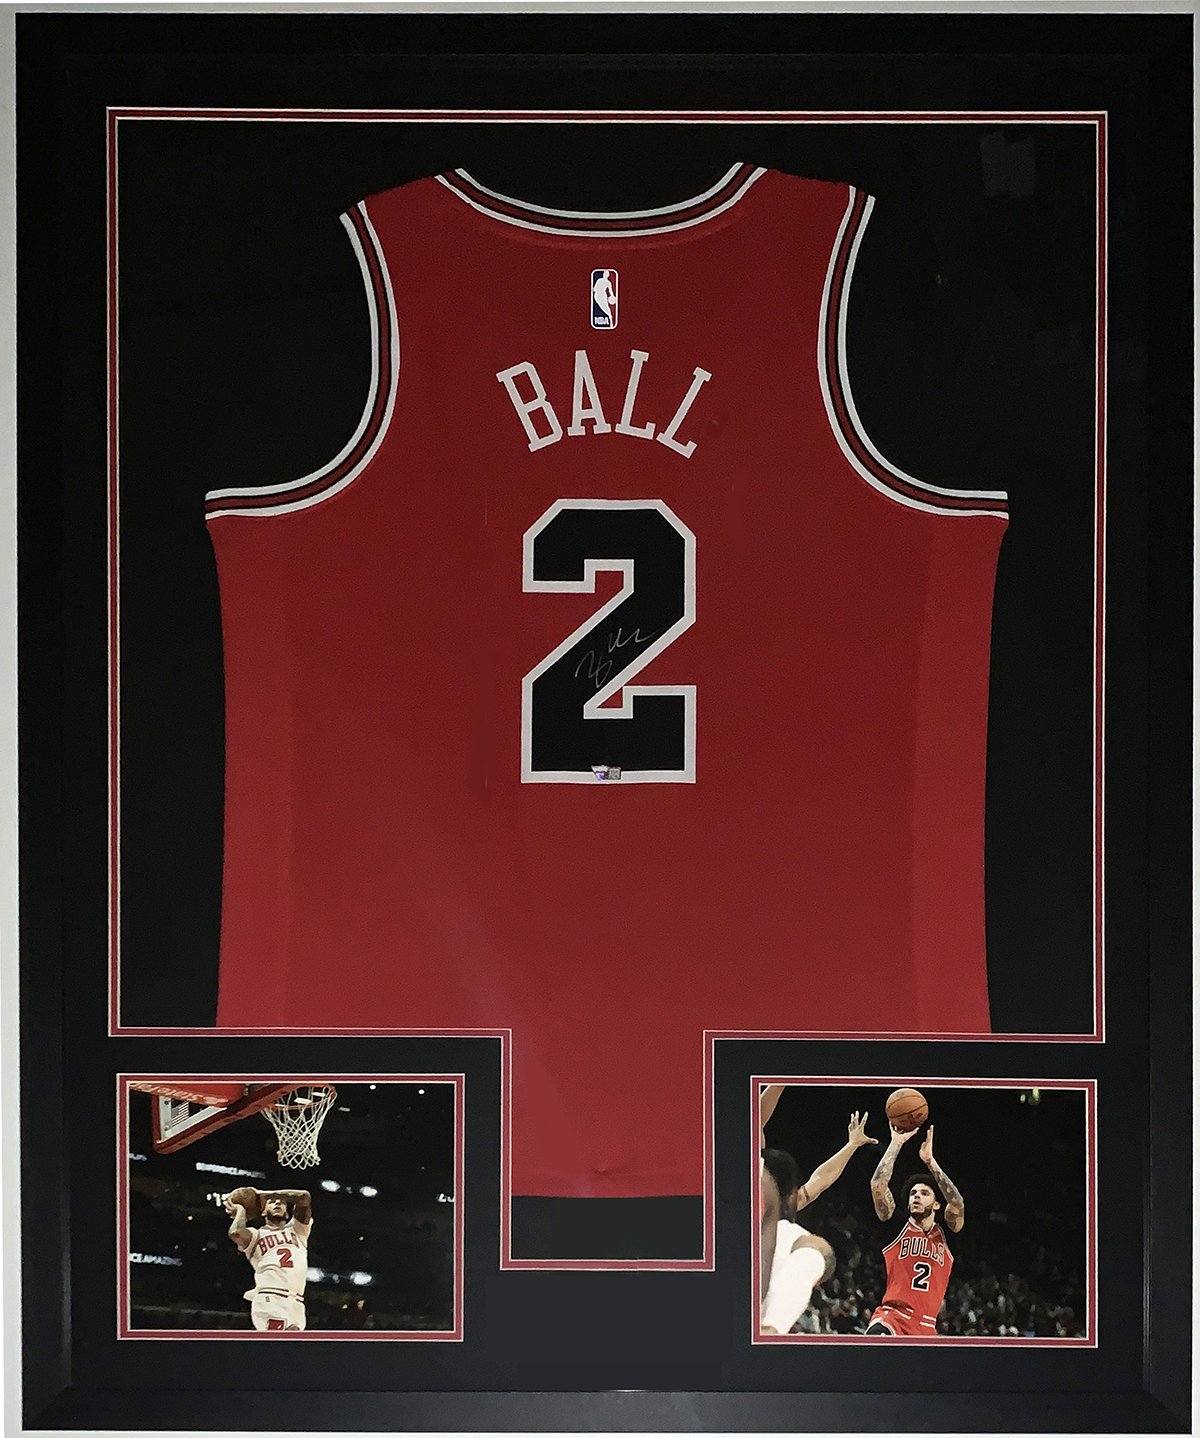 Fanatics Authentic Lonzo Ball Red Chicago Bulls Autographed Nike Swingman Jersey with Go Bulls Inscription